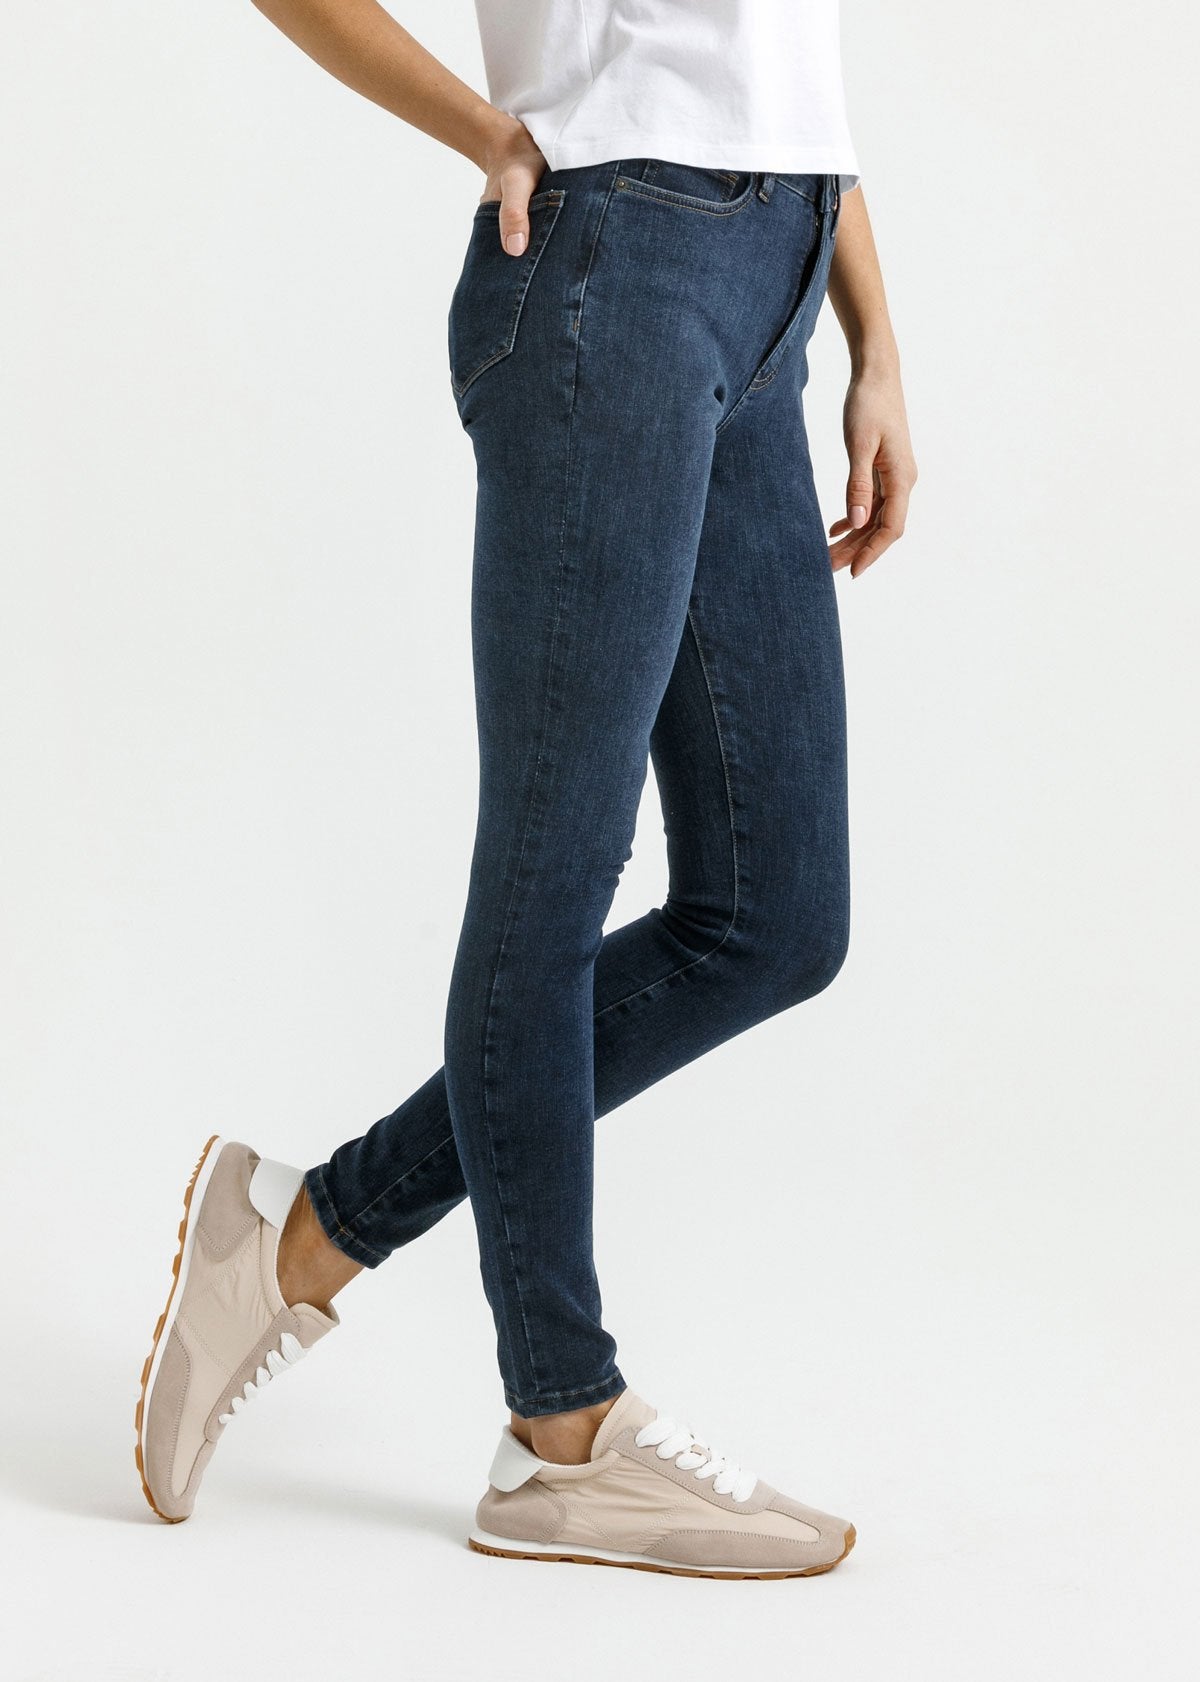 Super High Waisted Stretchy Skinny Jeans - Navy Blue Denim